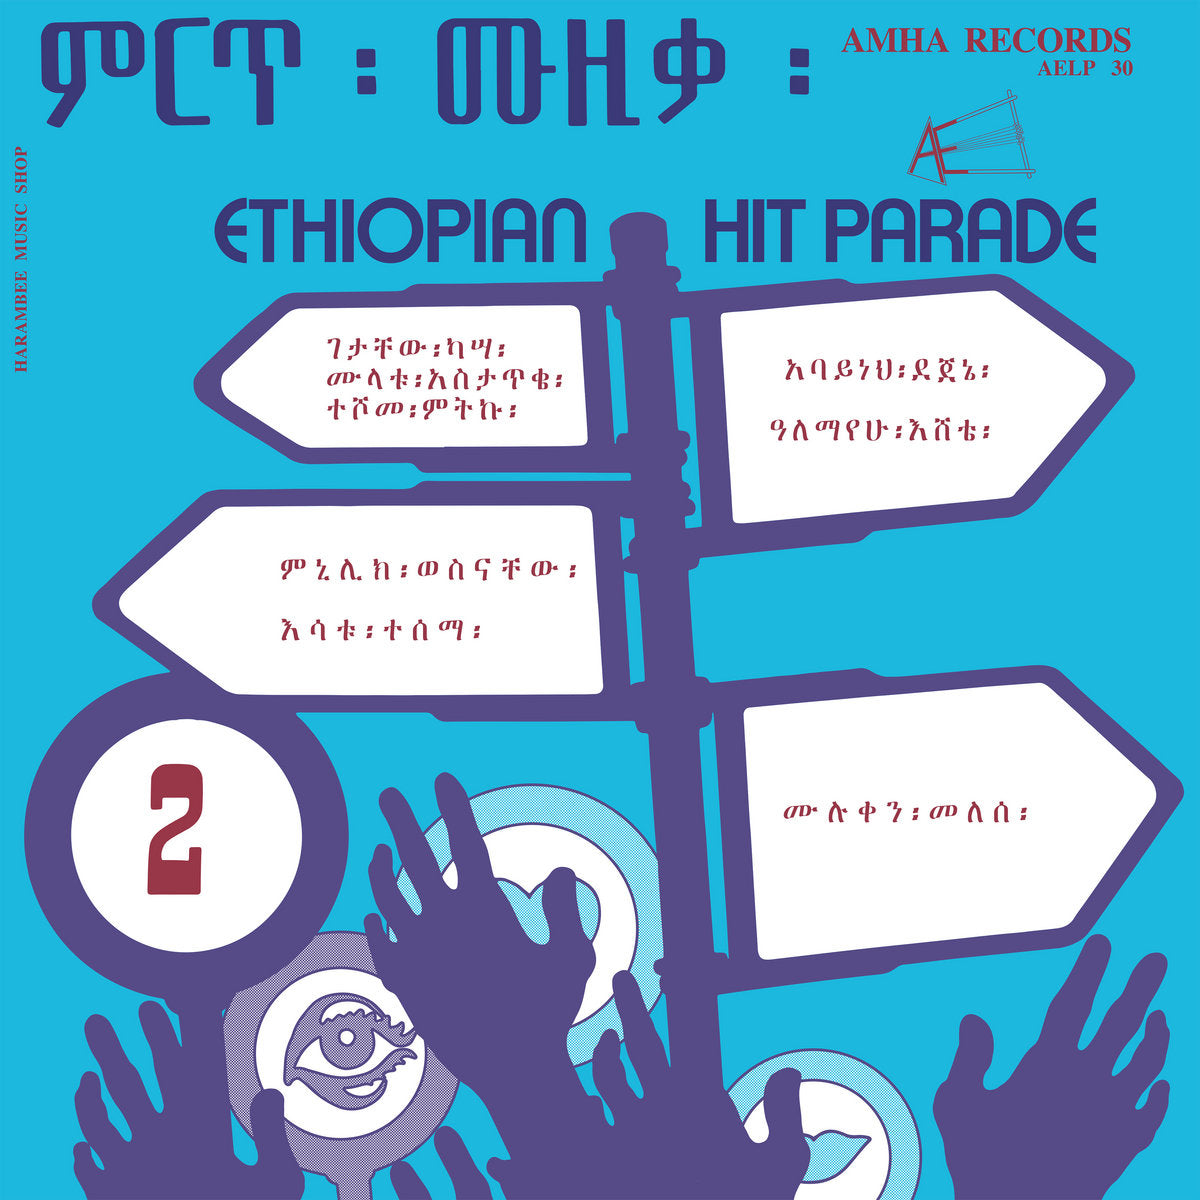 Various Artists: Ethiopian Hit Parade Vol 2 (Vinyl LP)